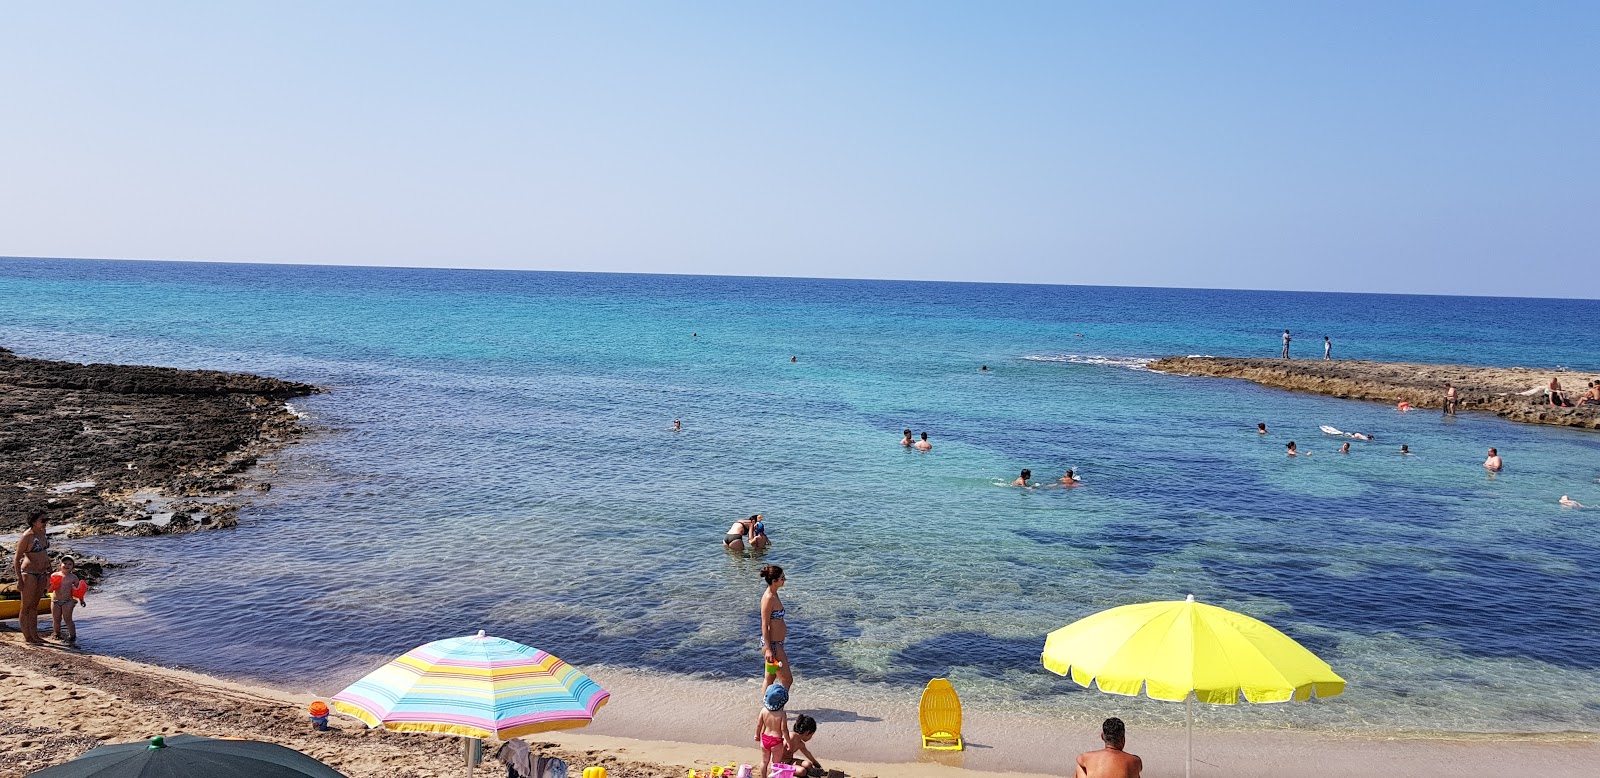 Photo of Spiaggia del Mare dei Cavalli with blue pure water surface